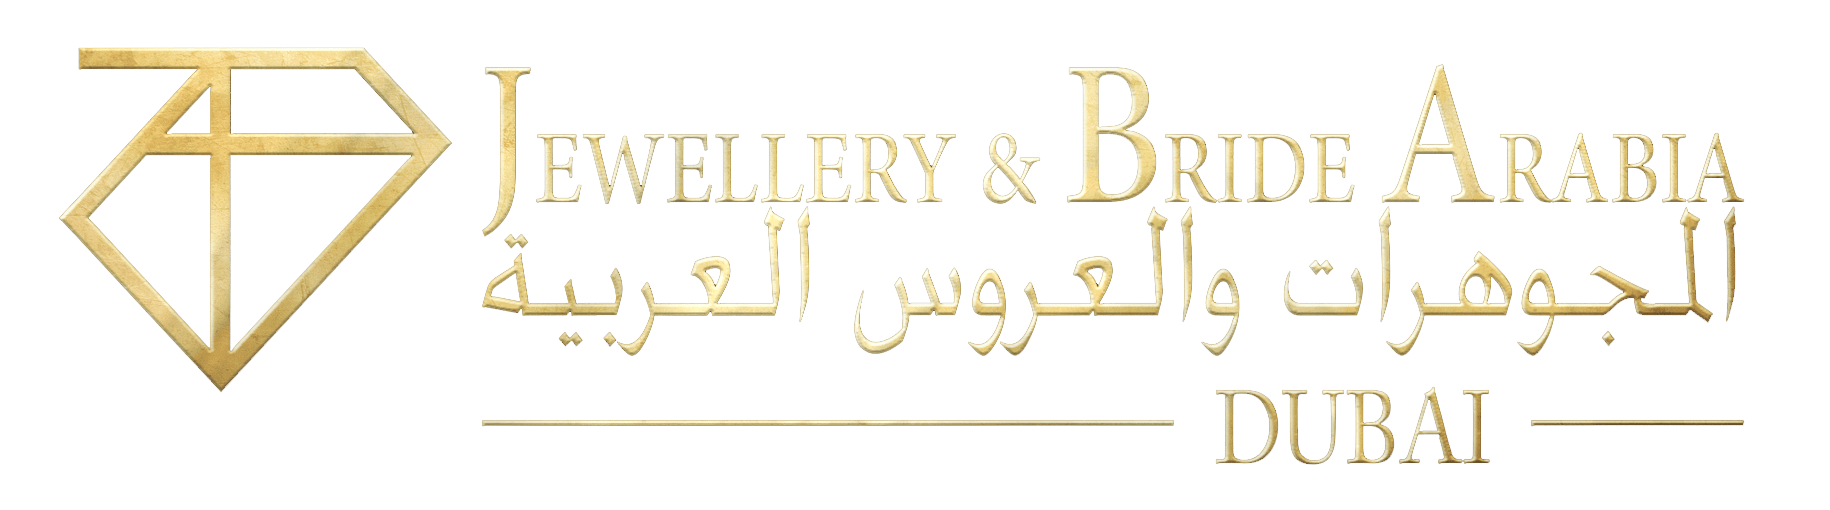 Jewellery and Bride Arabia